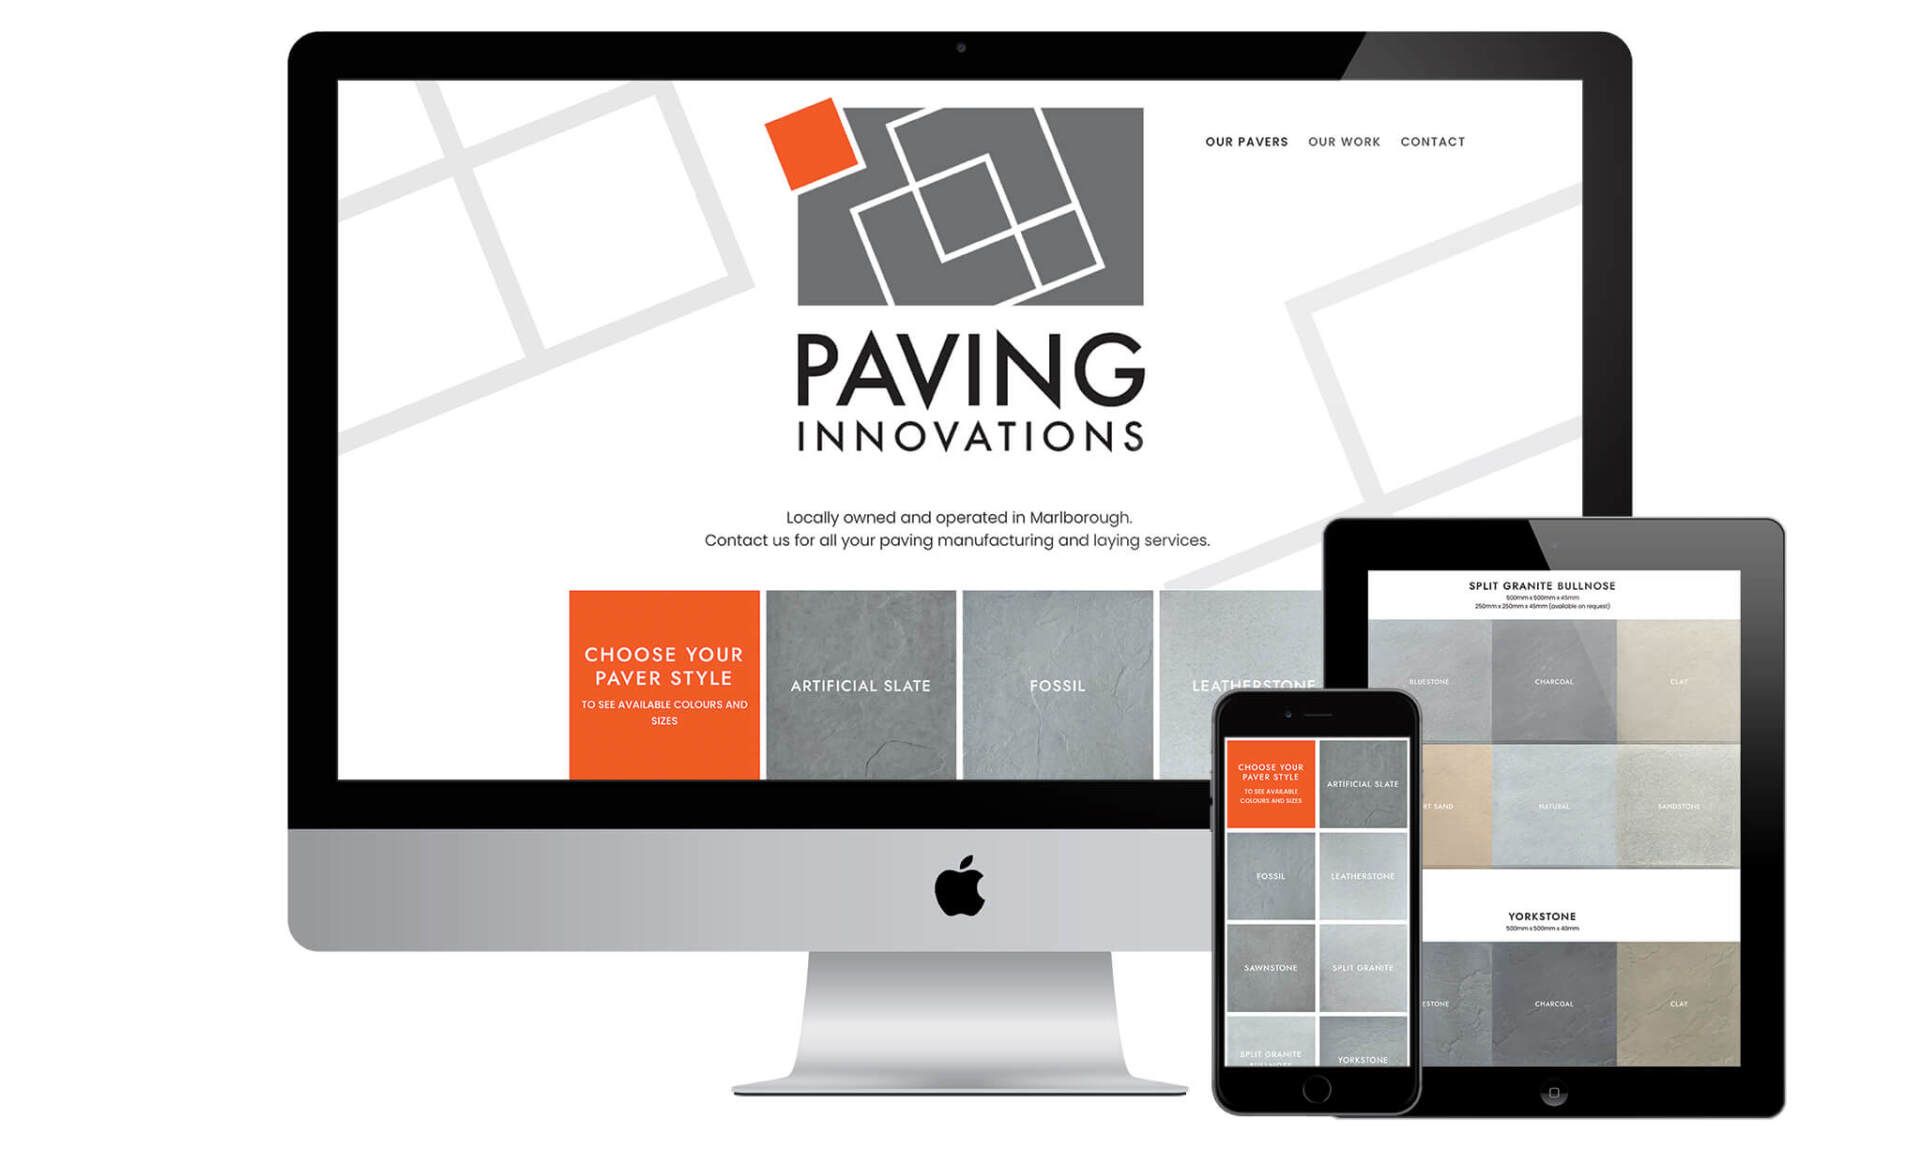 Paving Innovations website designed by Vanilla Hayes creative graphic design  studio in Blenheim, Marlborough, New Zealand